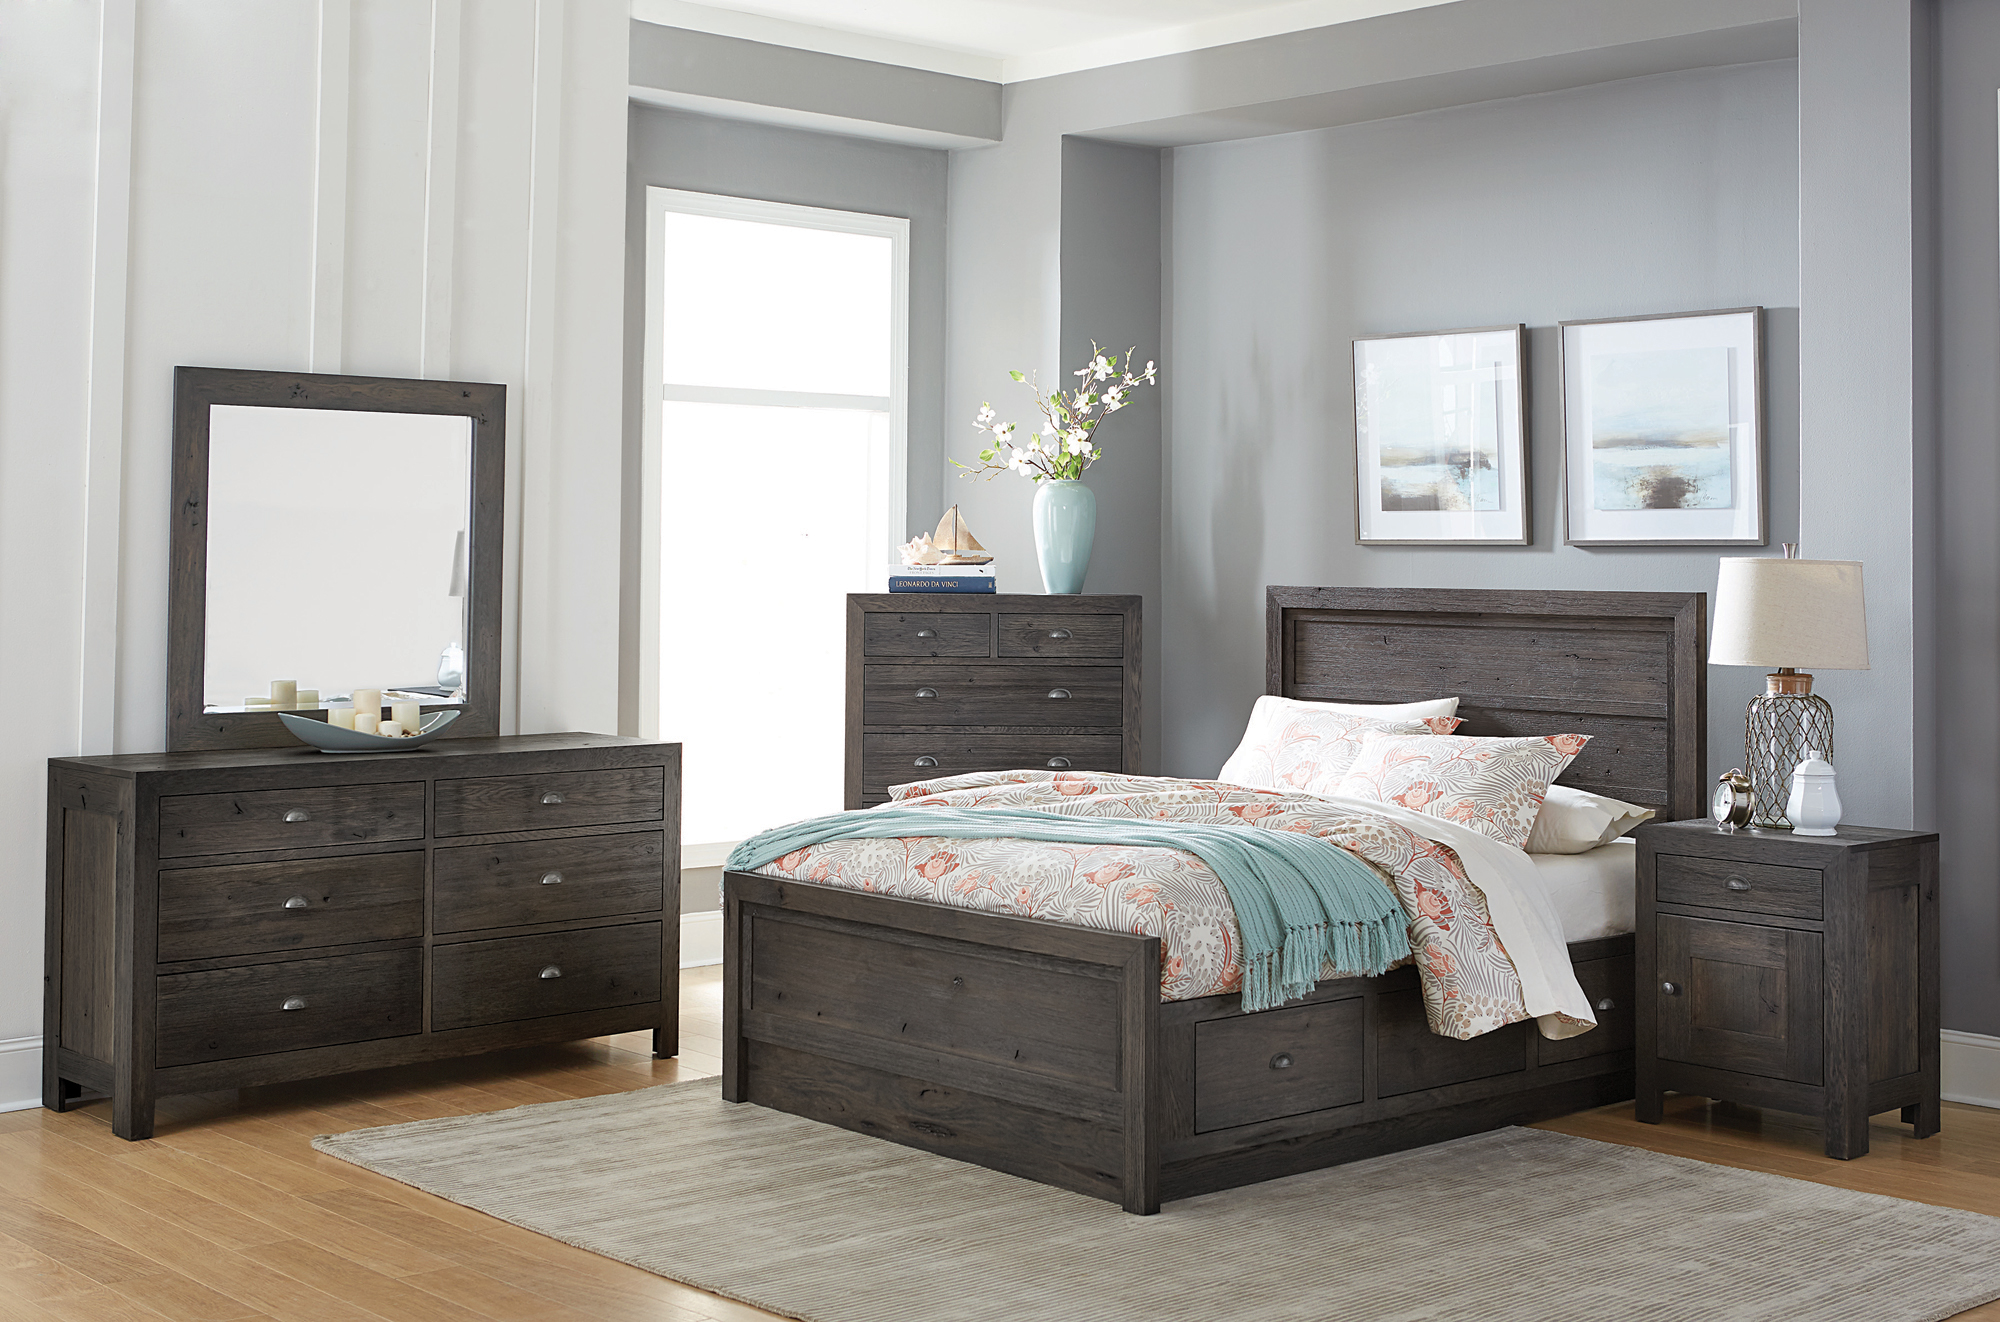 sonoma bedroom furniture set